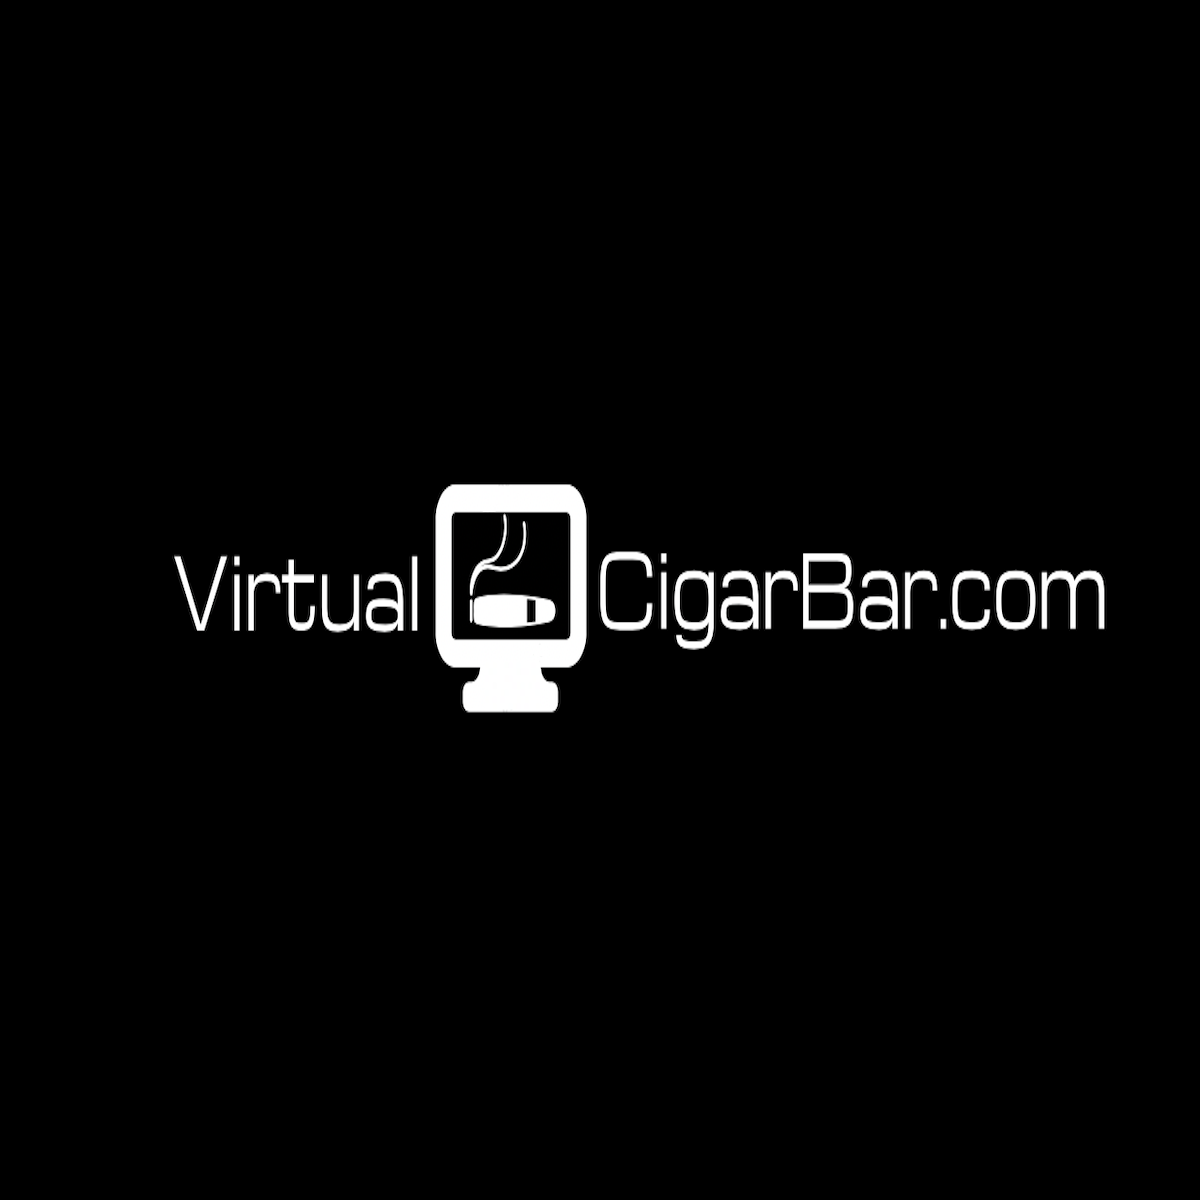 Virtual Cigar Bar